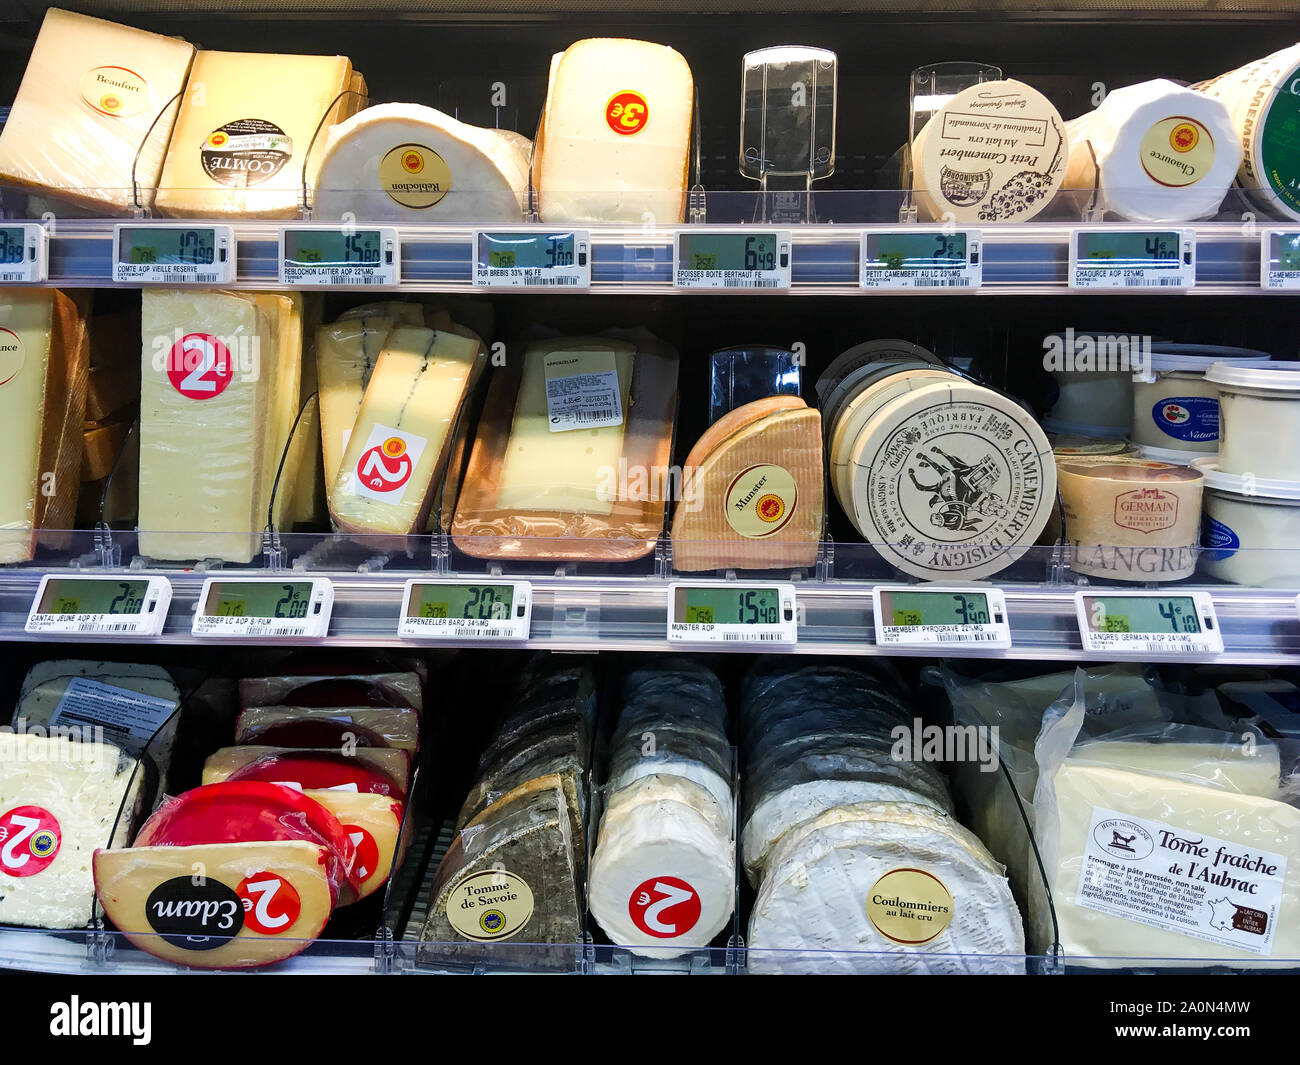 Cheese display, Supermarket, Lyon, France Stock Photo